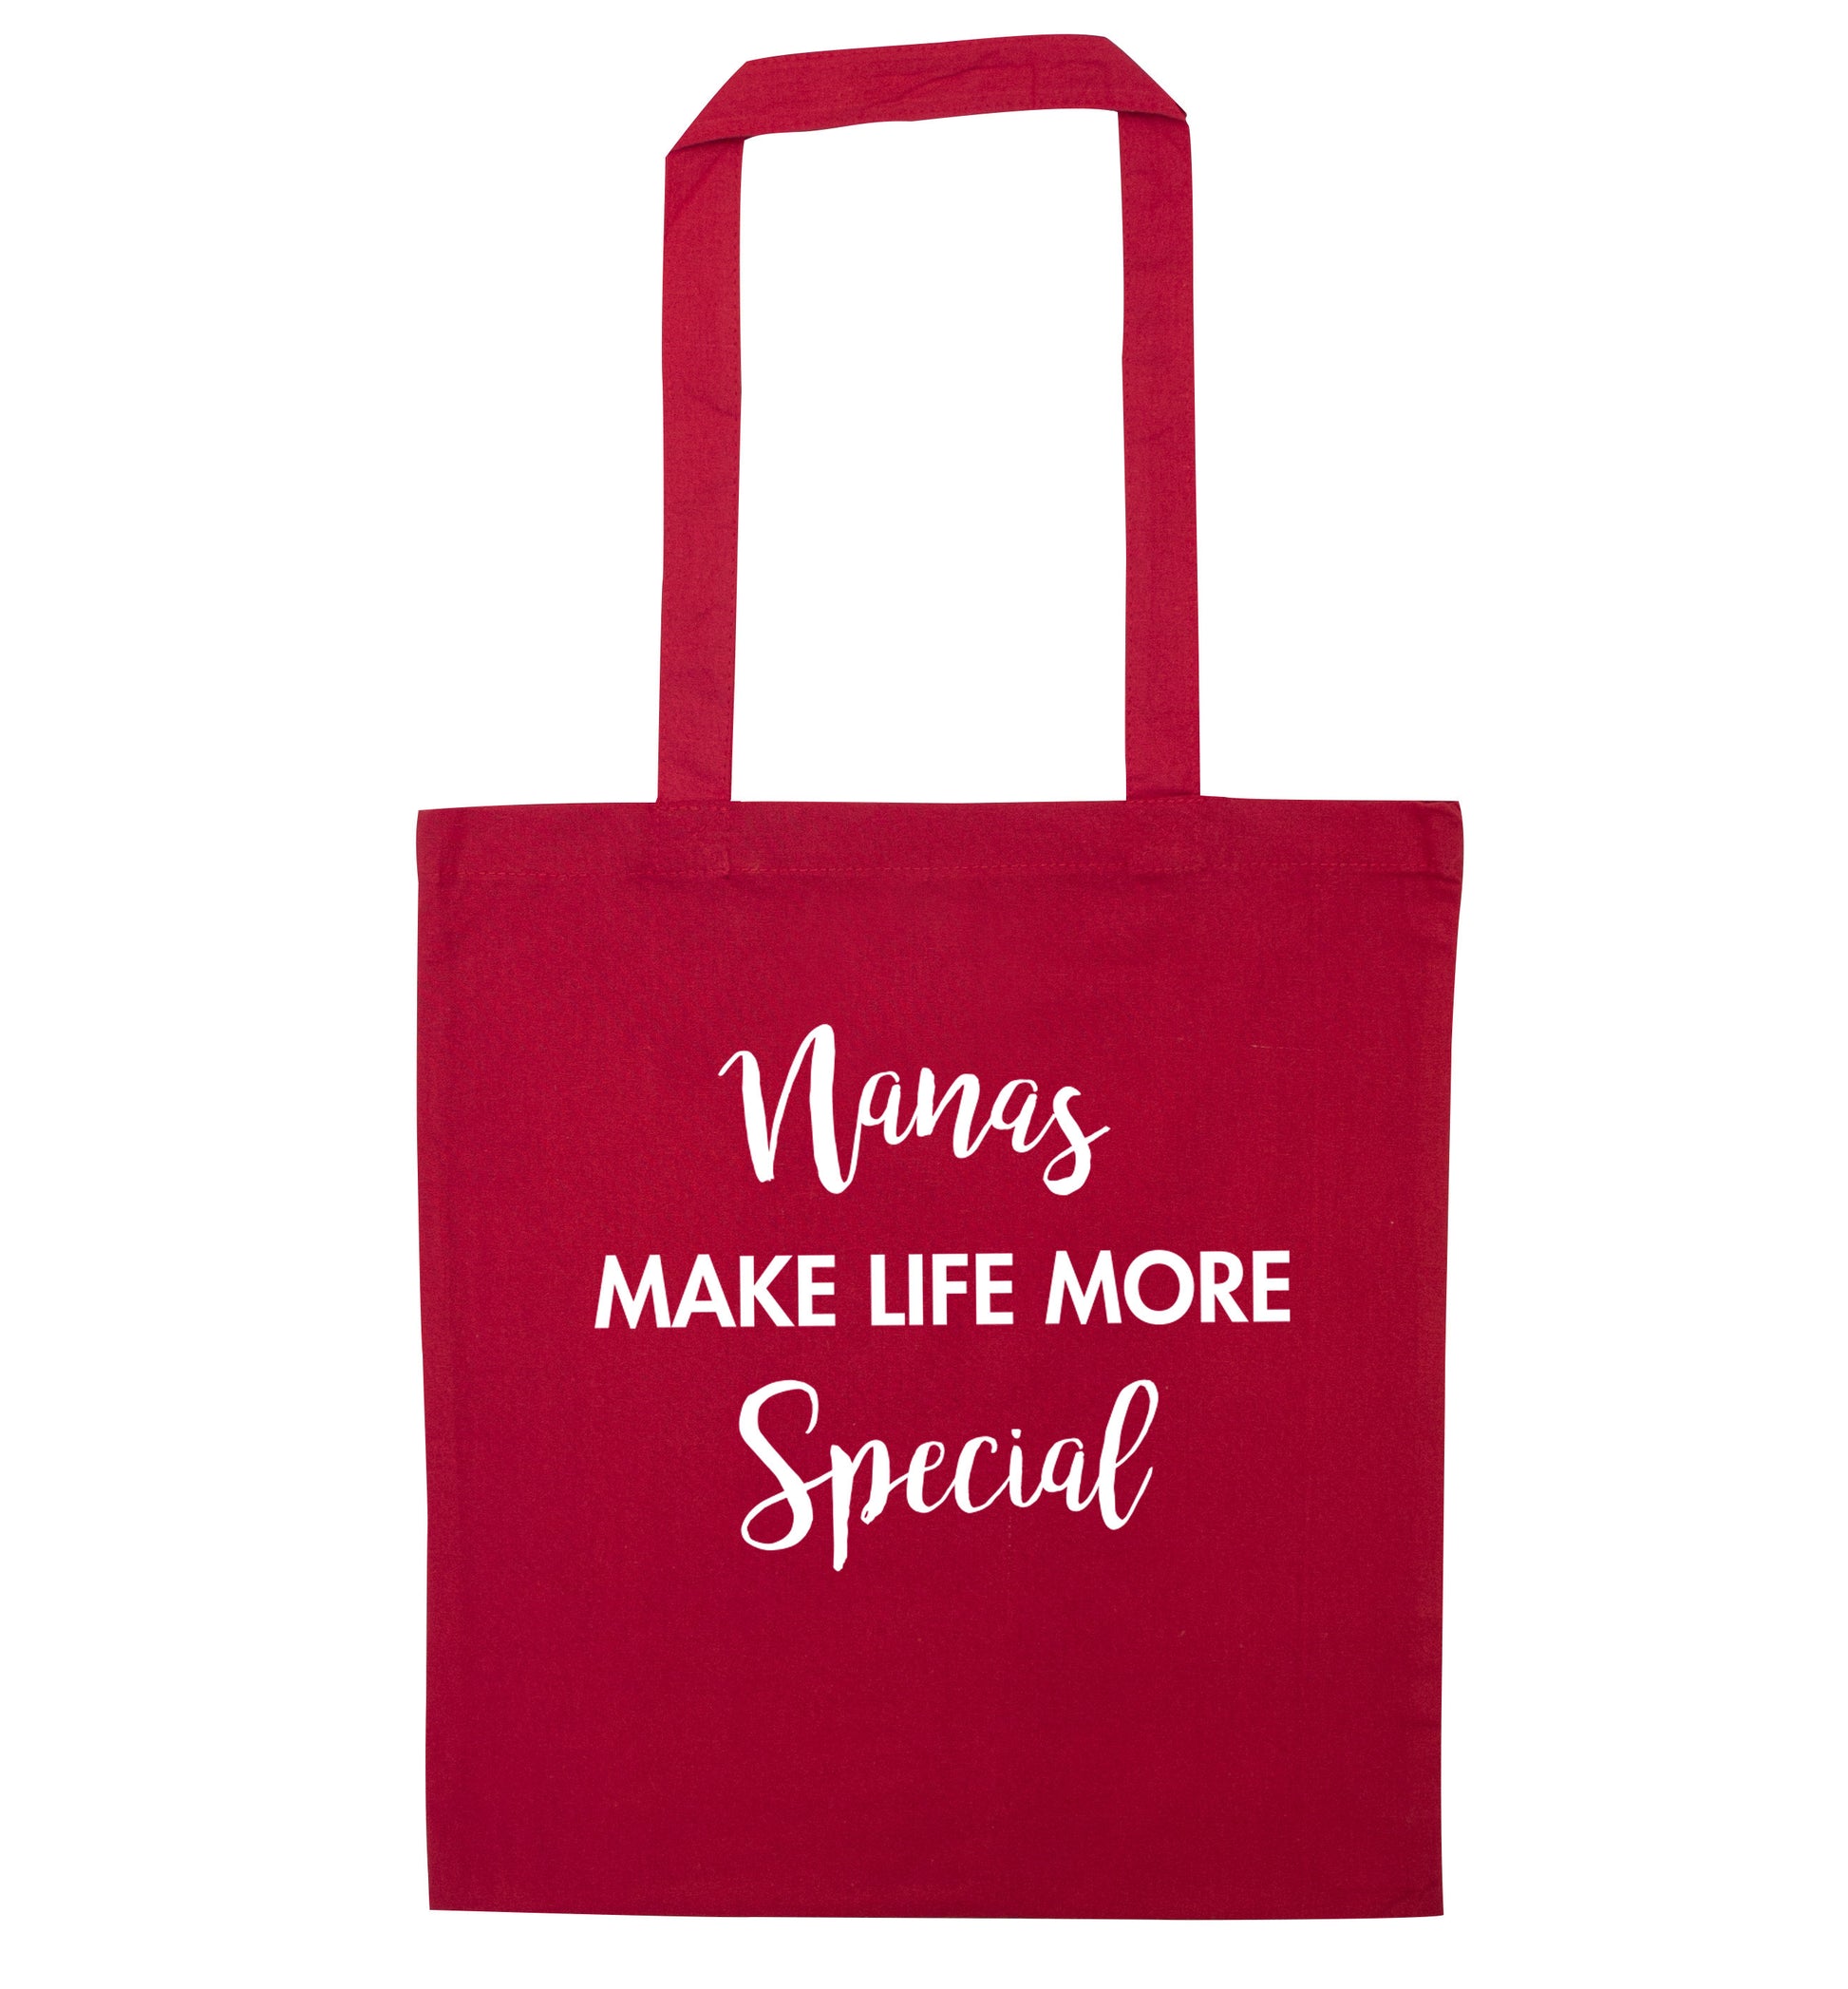 Nanas make life more special red tote bag